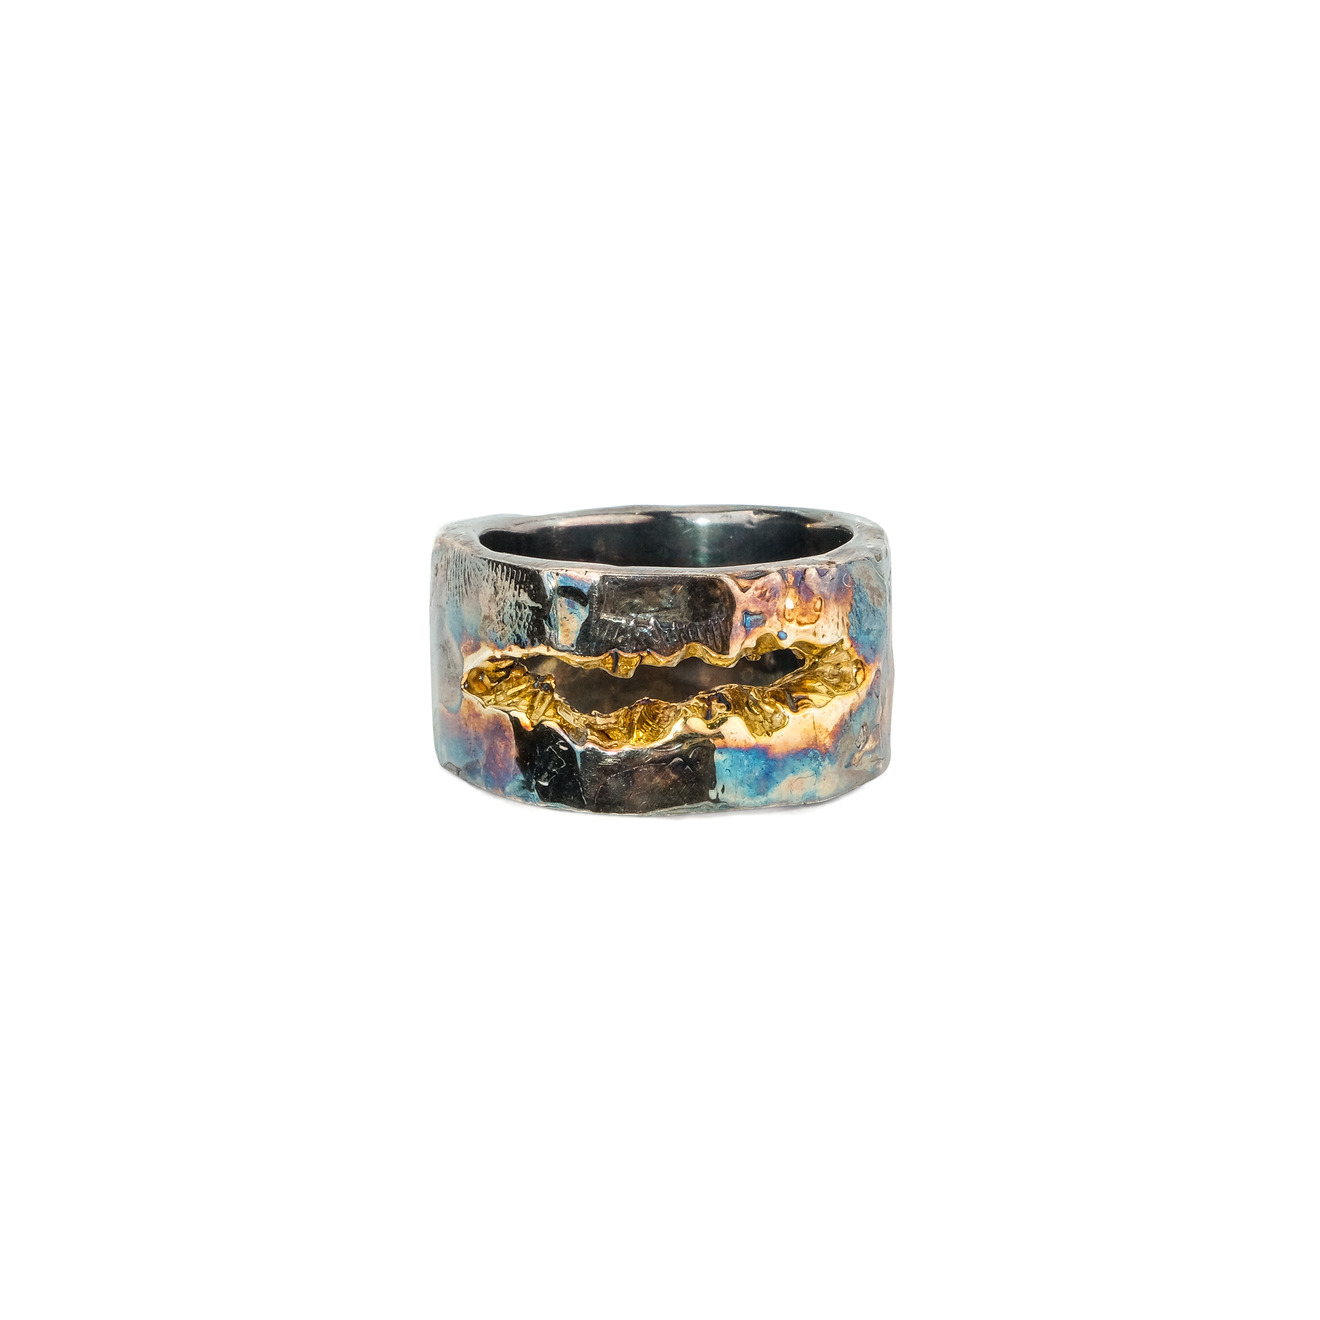 Kintsugi Jewelry Кольцо Forgiveness из серебра с позолотой lusin jewelry кольцо из серебра с узлом armenian knot ring